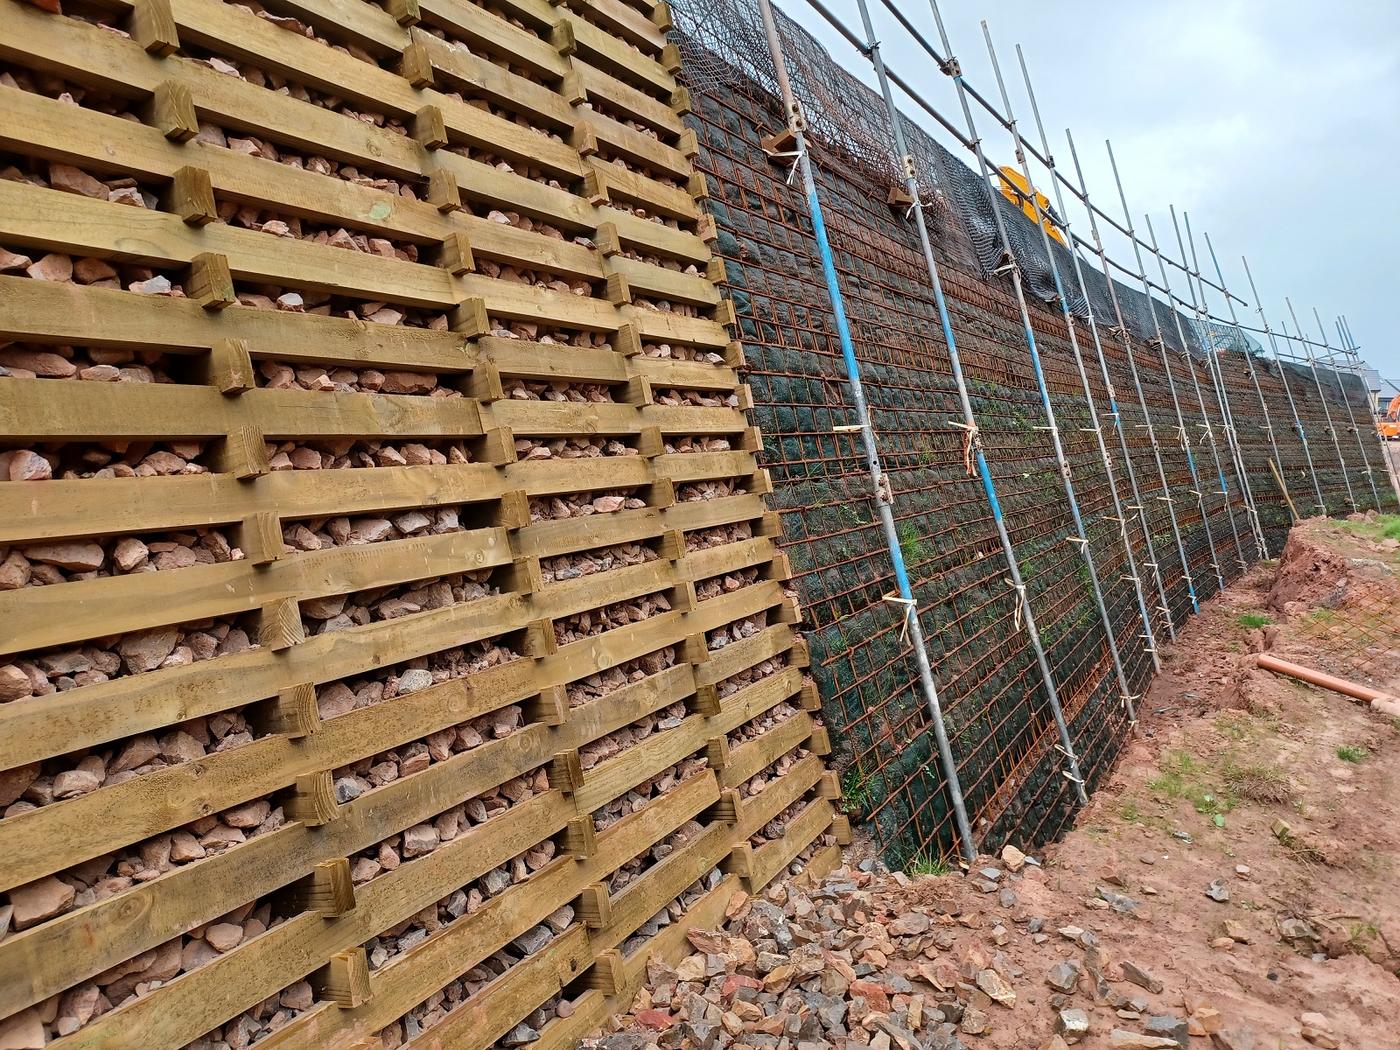 Permacrib timber crib retaining wall